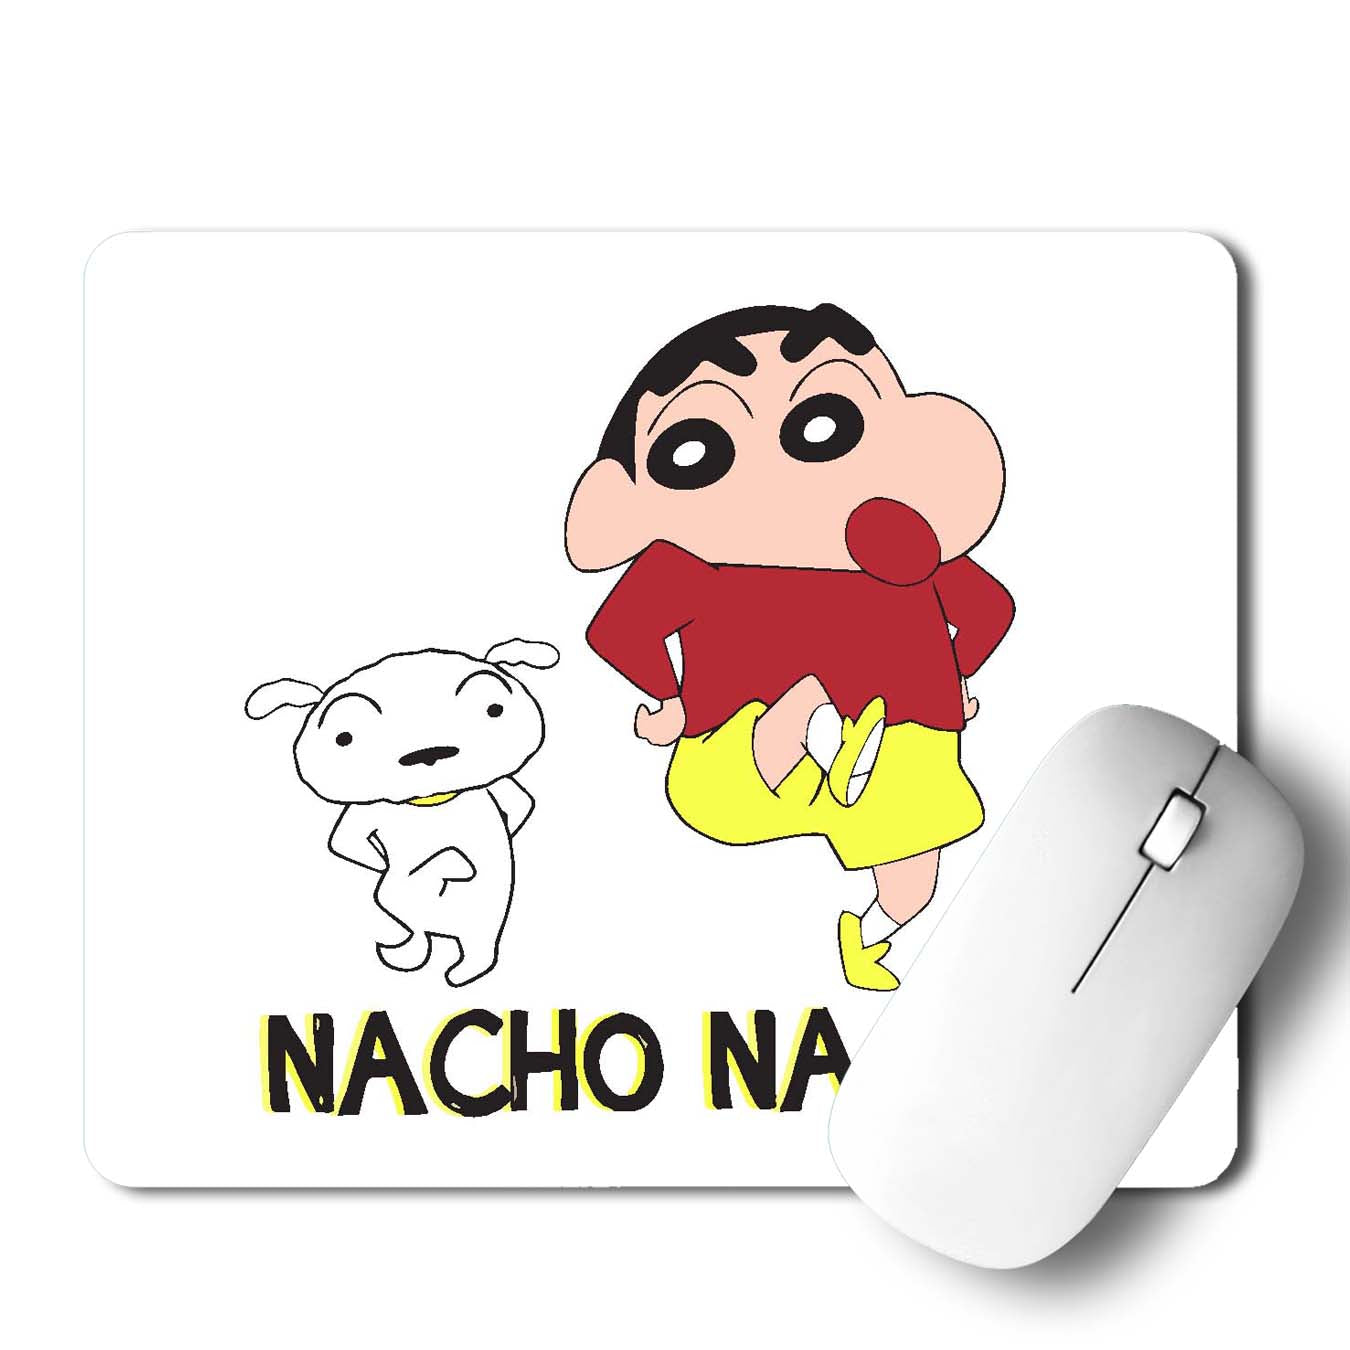 Nacho Nacho Mouse Pad